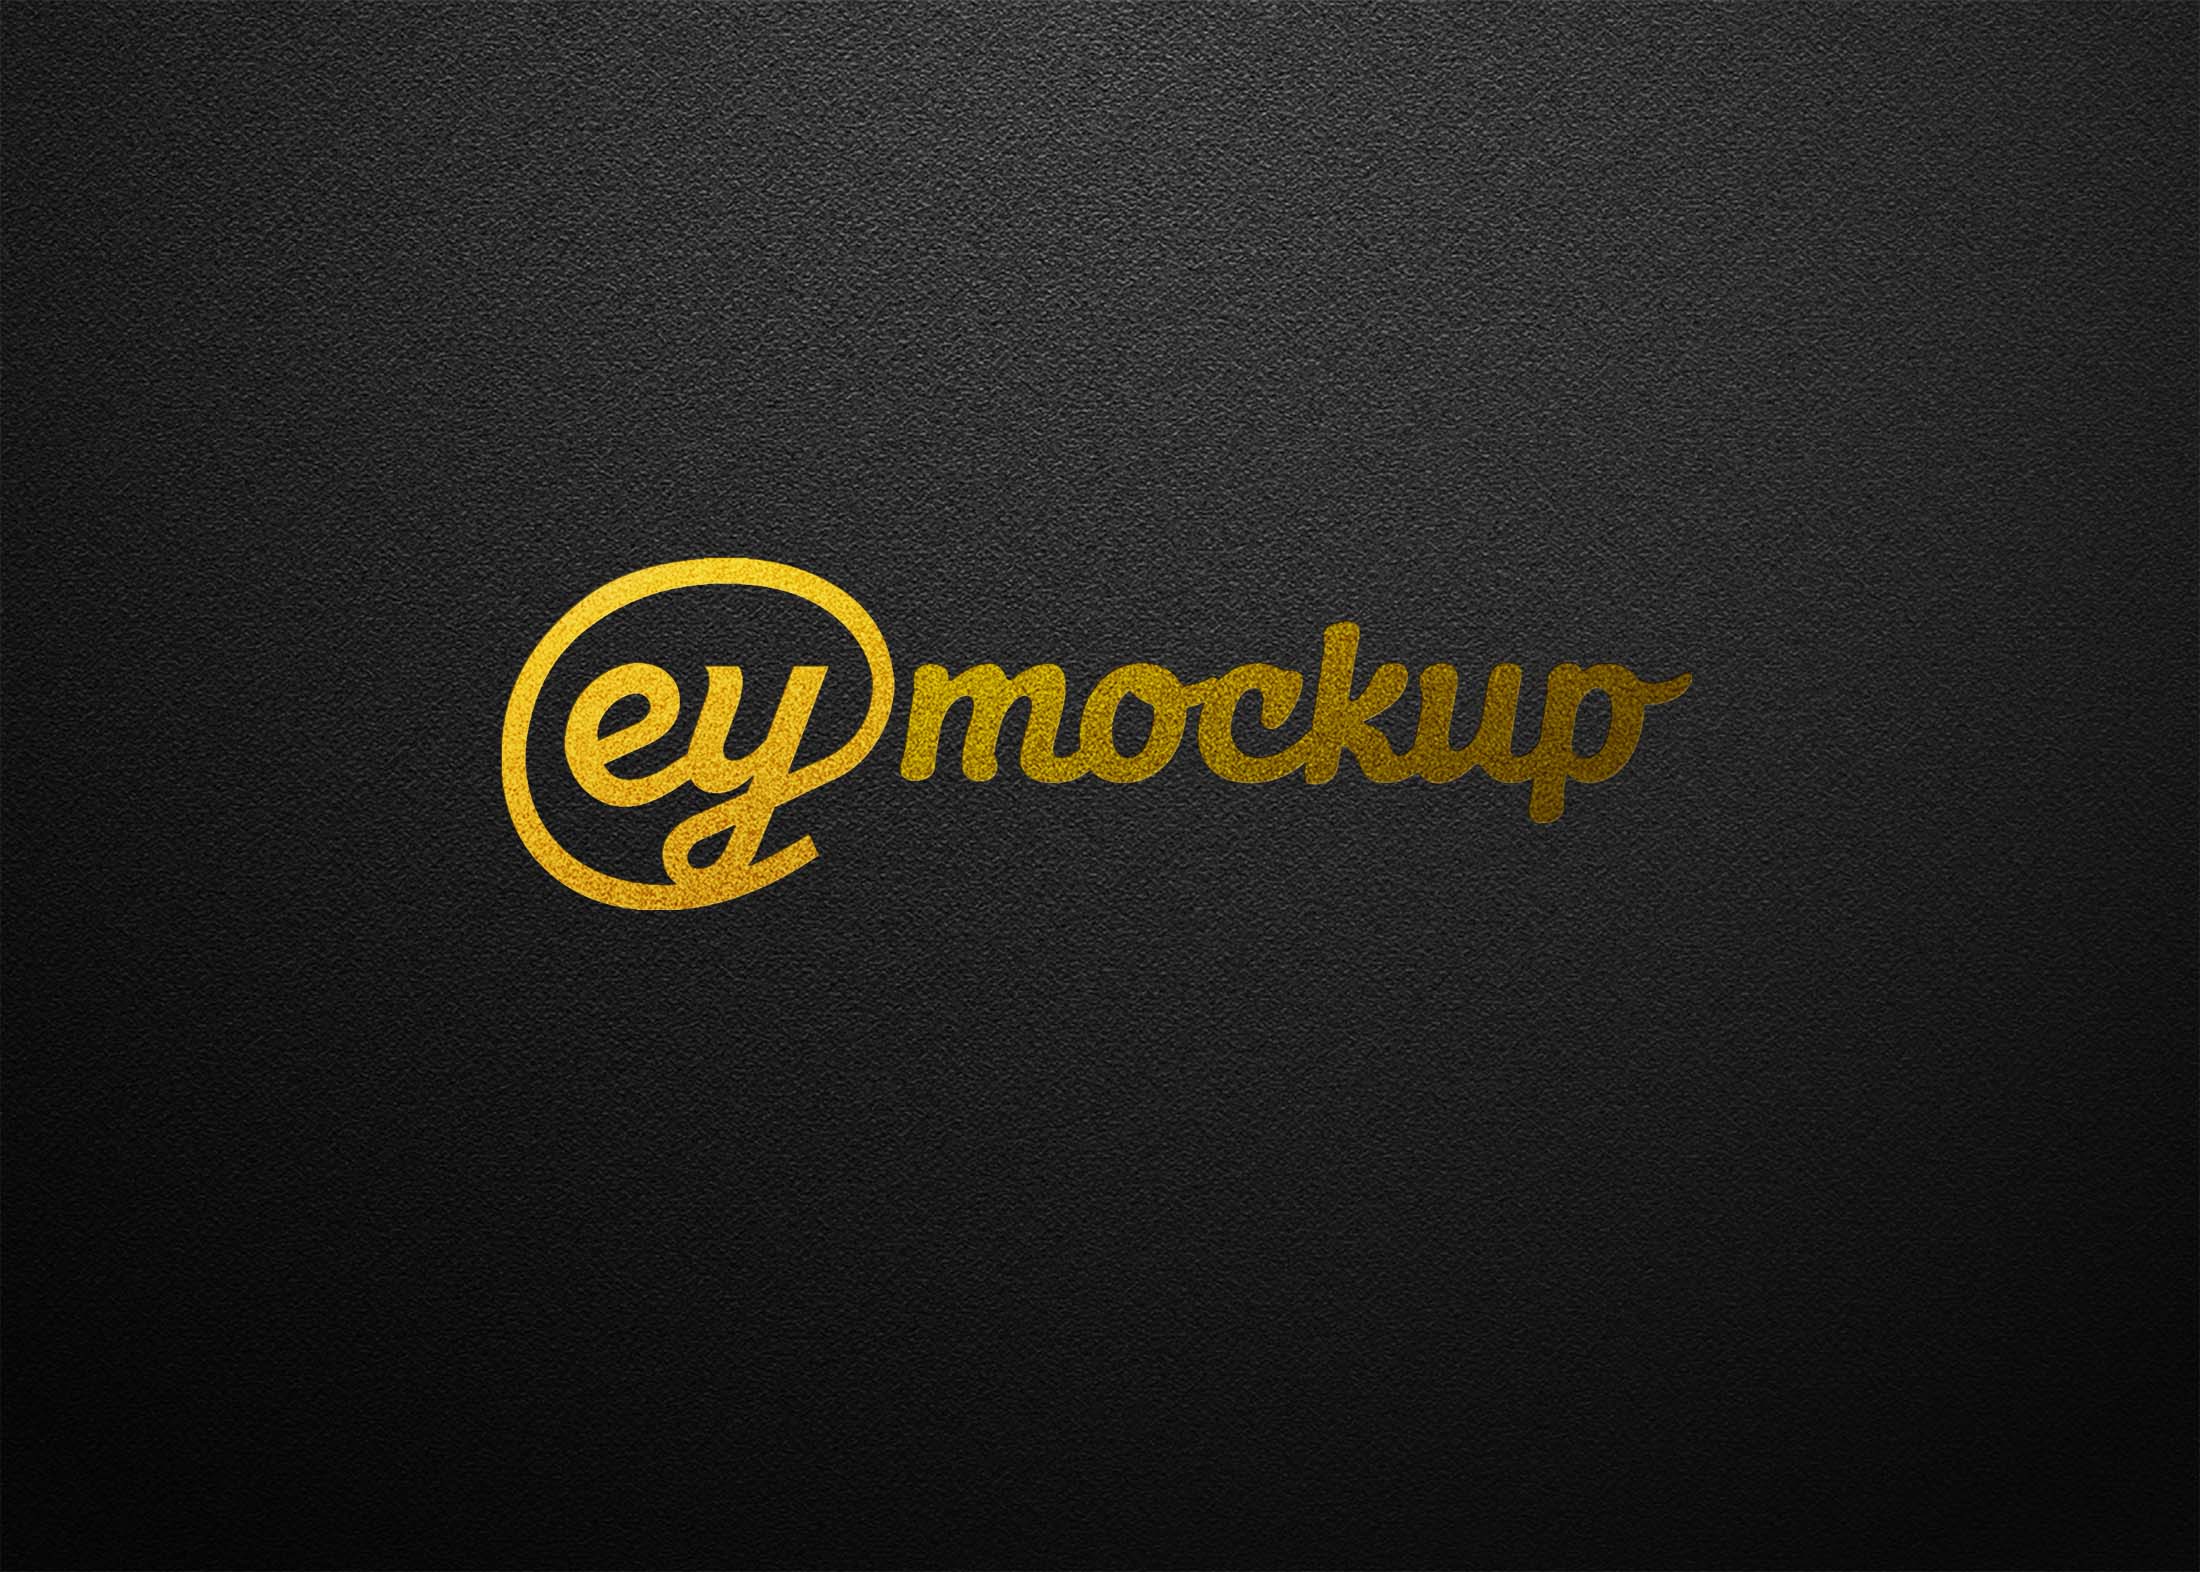 eymockup Gold Foil Logo Mockup